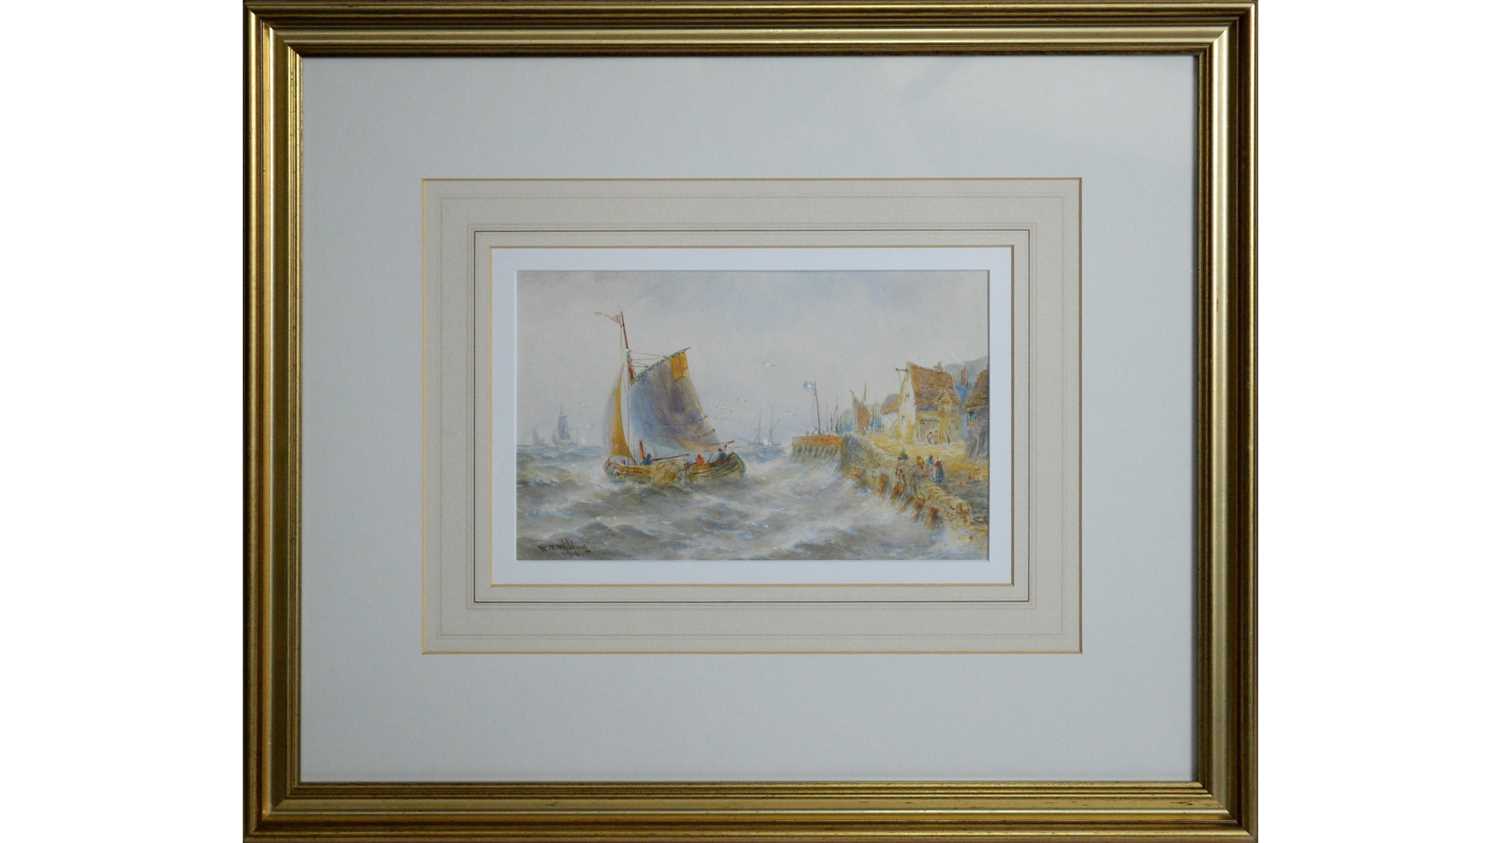 Lot 32 - Robert Thornton Wilding - Fishing Fleet off Shore | watercolour